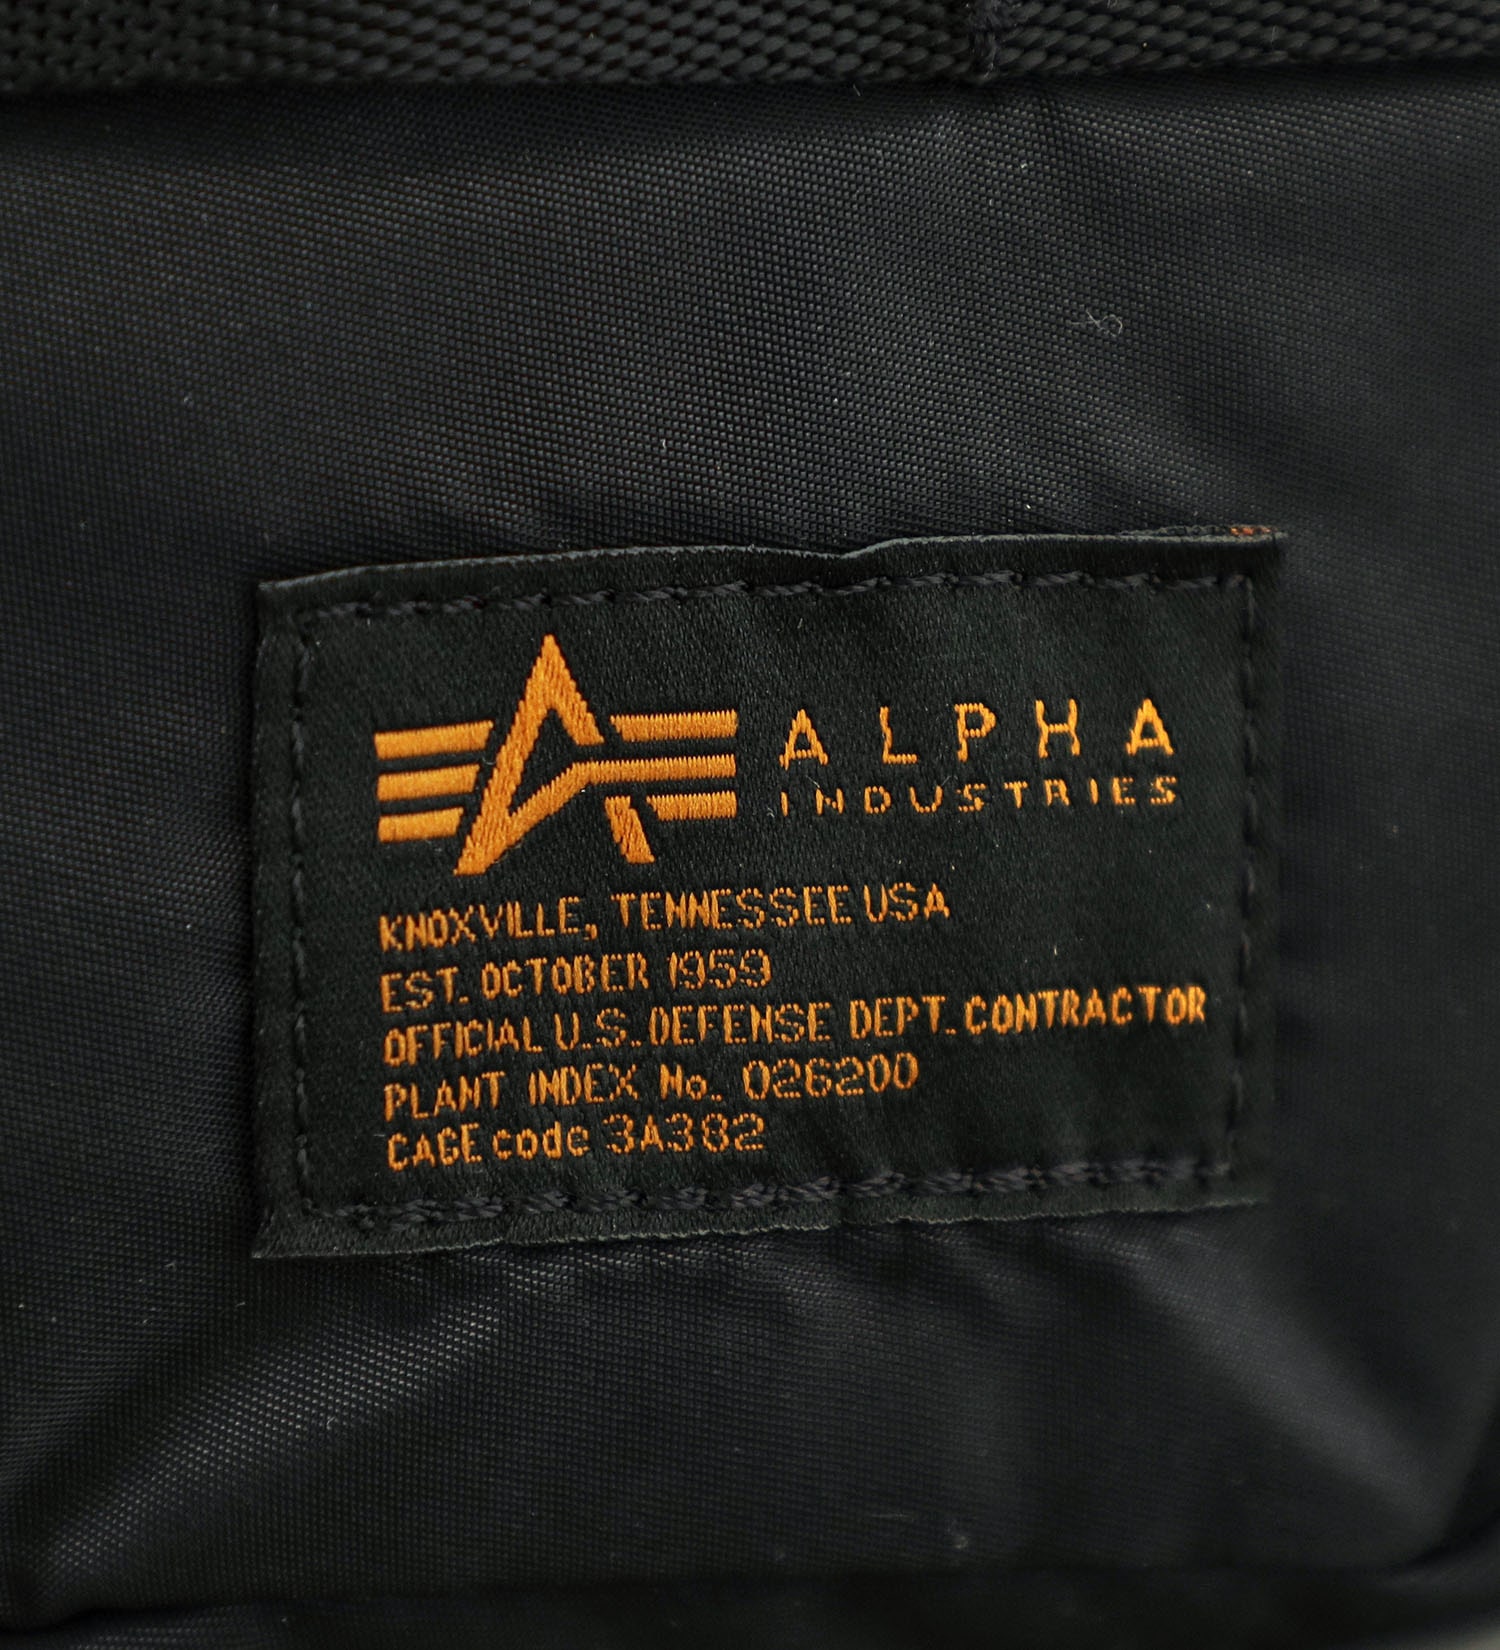 ALPHA(アルファ)のナイロンコーデュラツイル ウエストバッグ|バッグ/ボディバッグ/ウェストポーチ/メンズ|ブラック